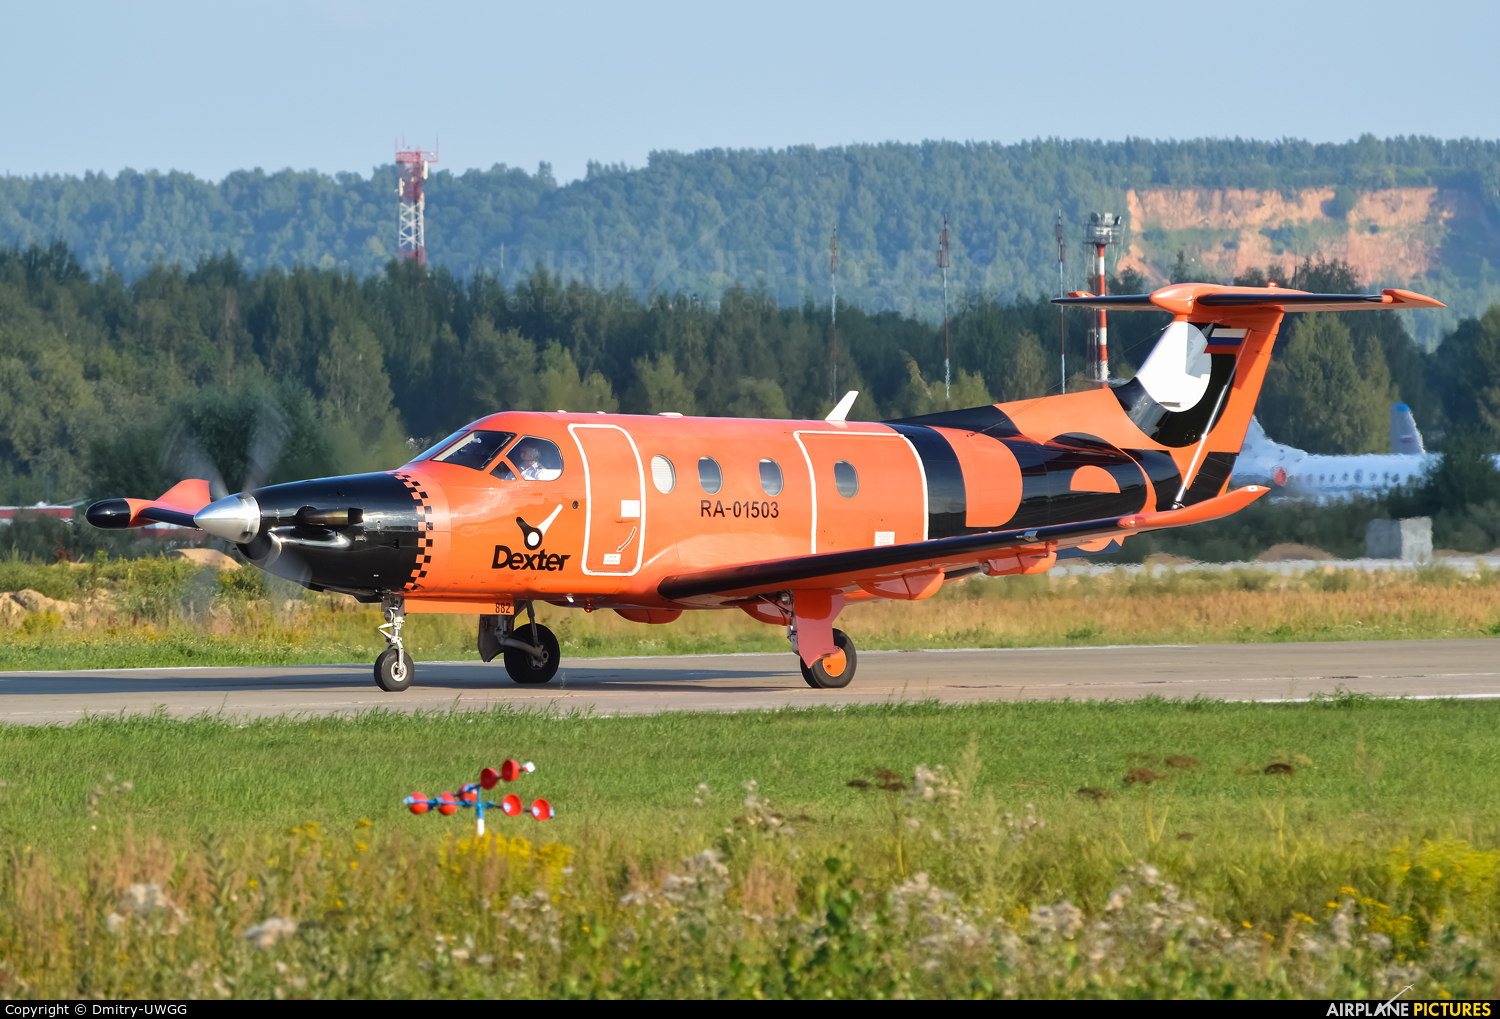 Dexter RA-01503 aircraft at Nizhniy Novgorod